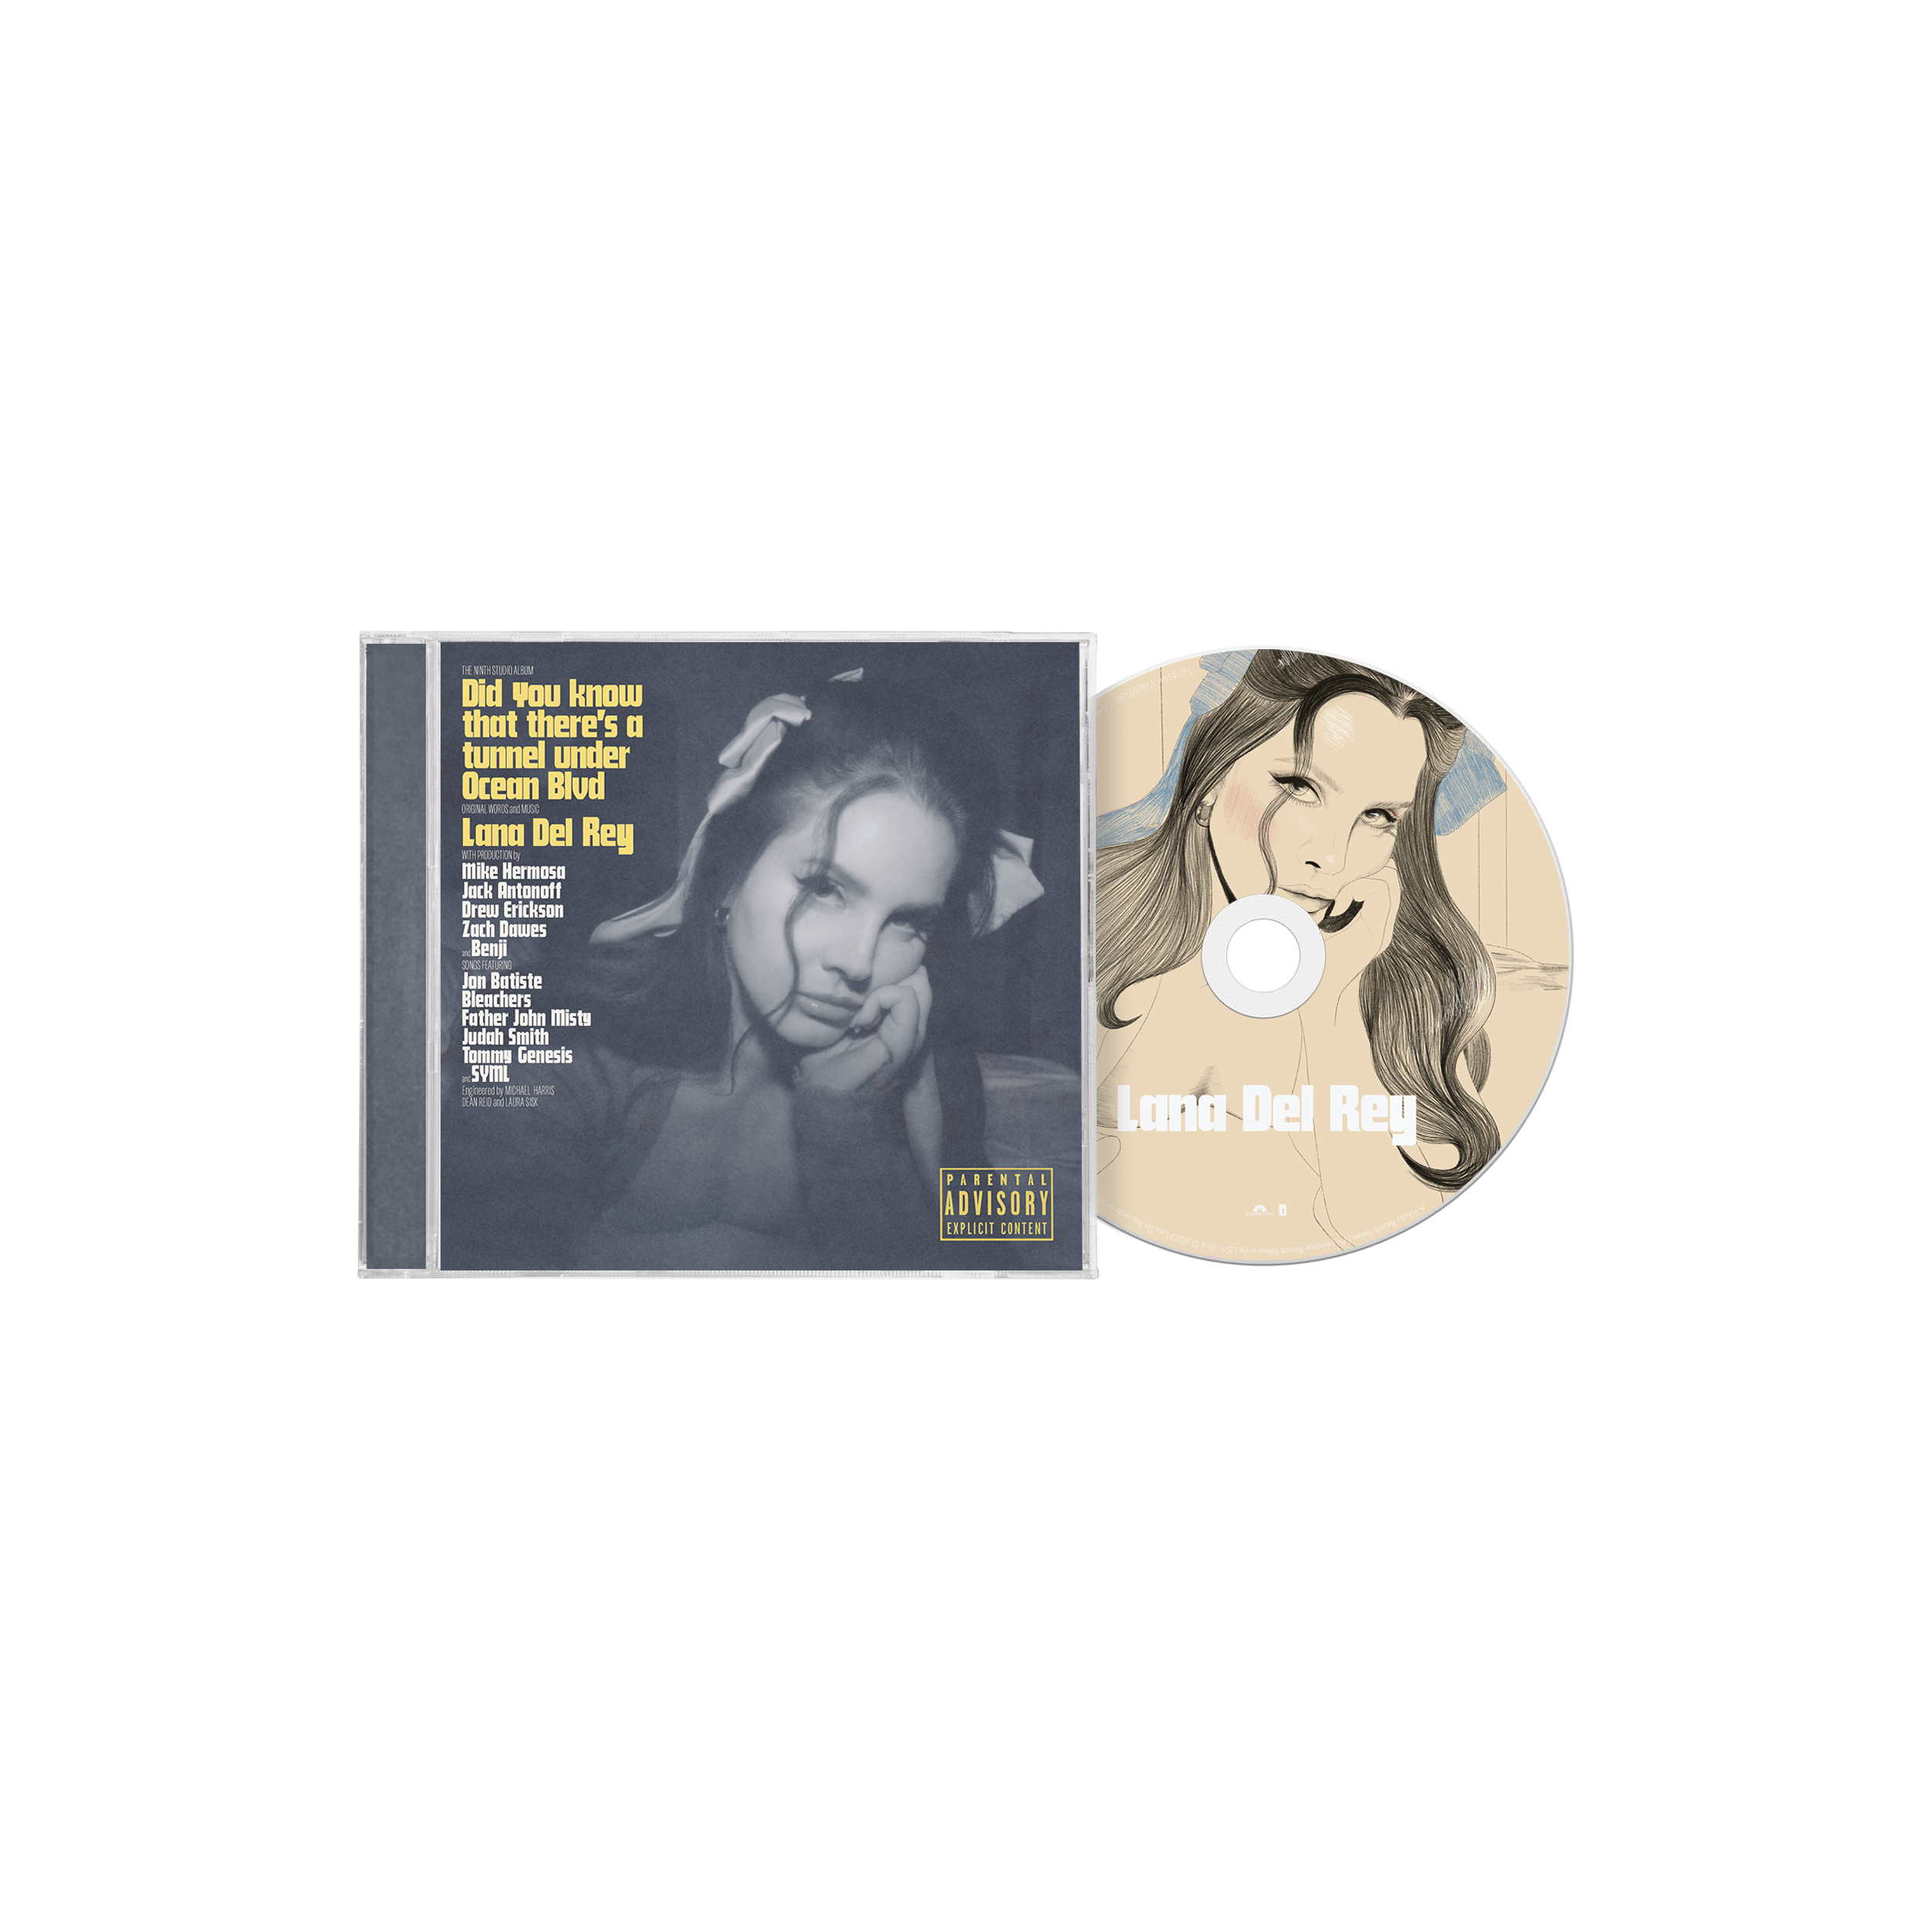 Lana Del Rey: Blue Banisters Vinyl & CD. Norman Records UK